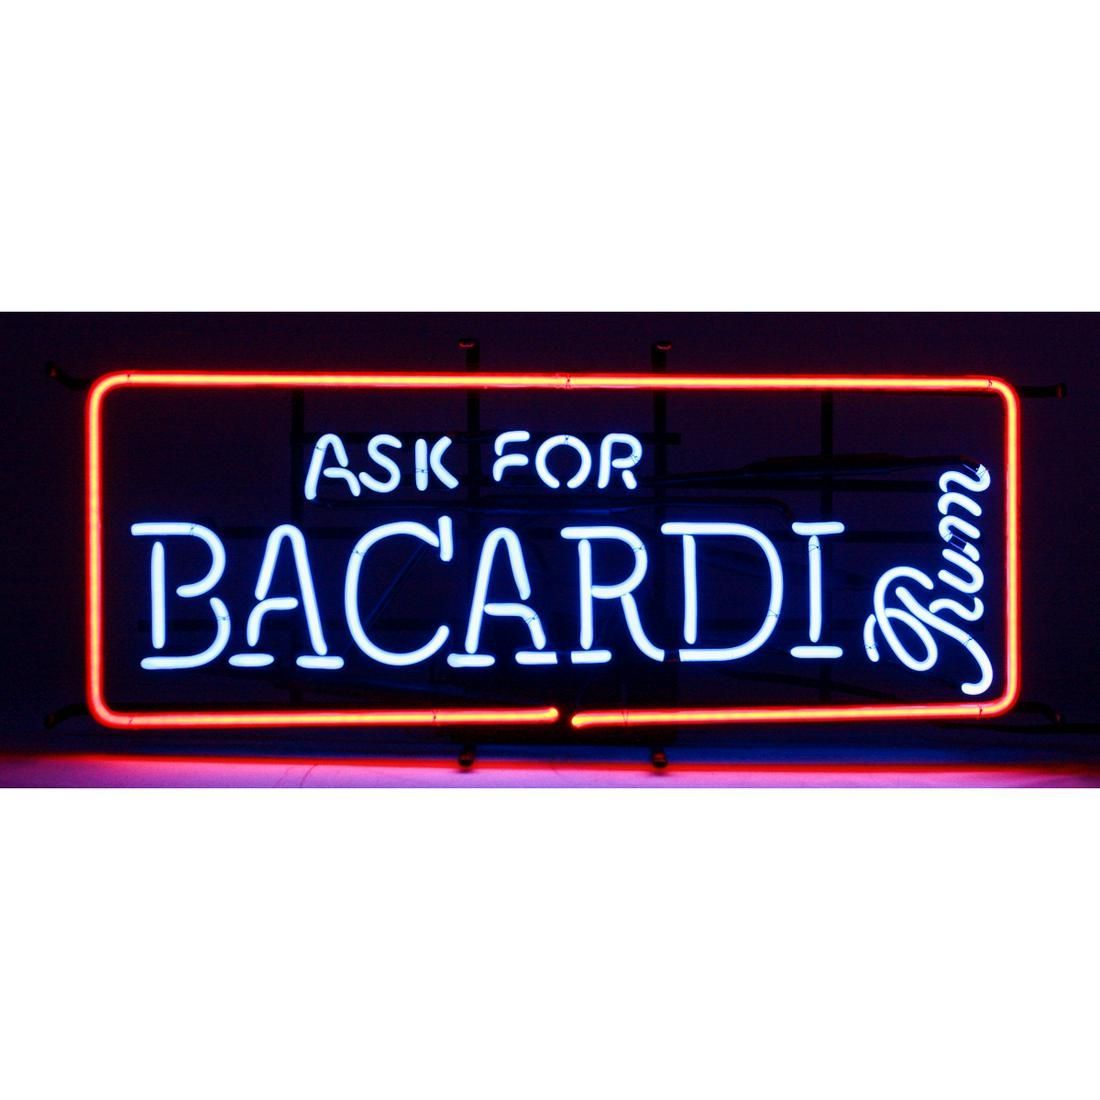 Original Vintage Ask For Bacardi Rum Neon Sign Original, vintage Ask For Bacardi&hellip;